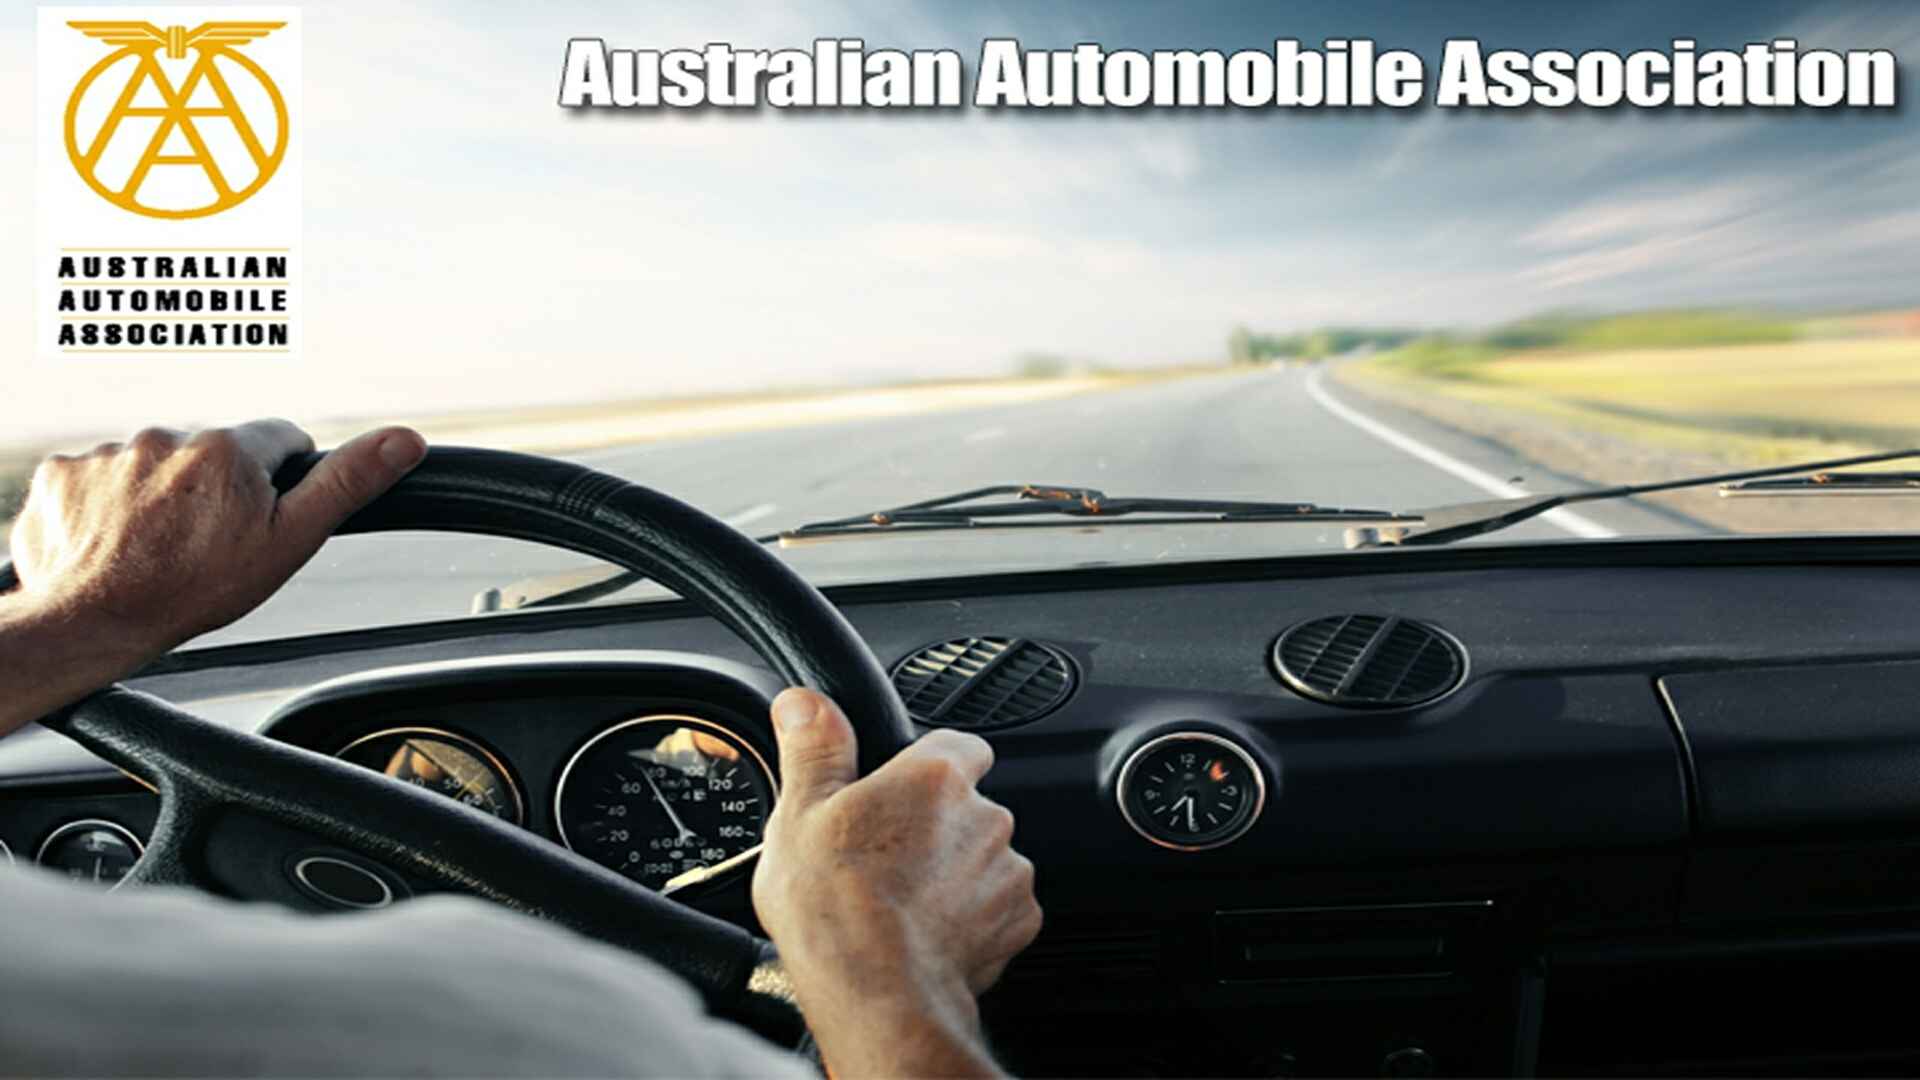 The Australian Automobile Association